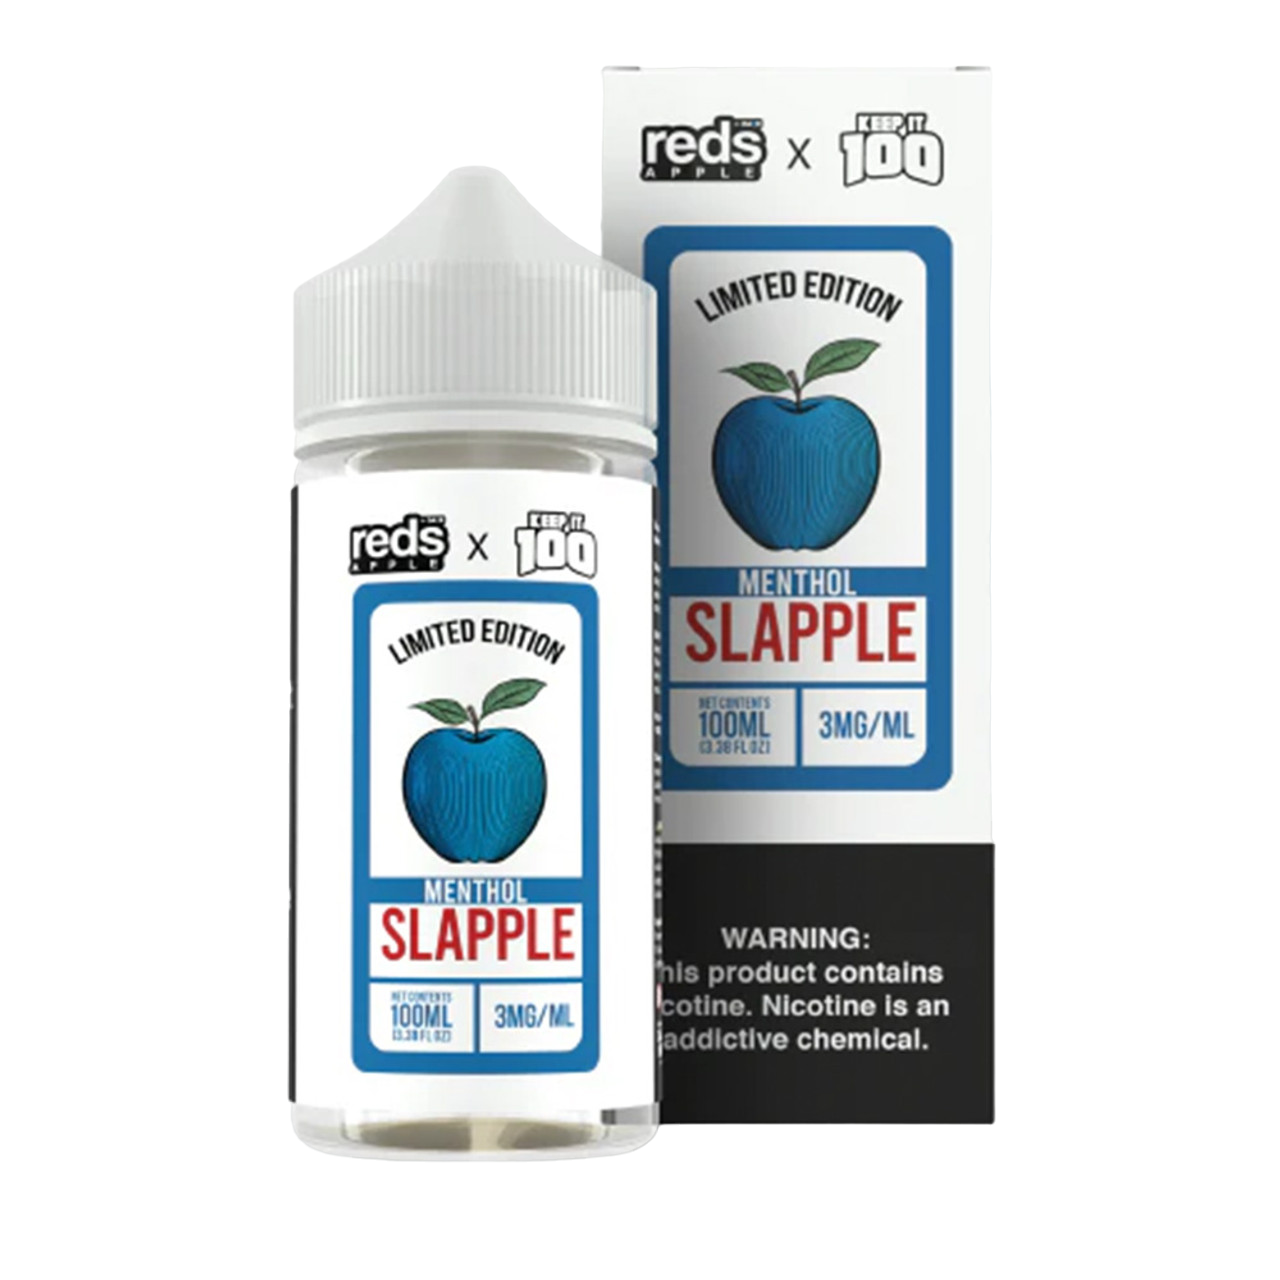 Reds Apple x Keep It 100 Limited Edition Nicotine E-Liquid By 7 Daze 100ML Menthol Slapple